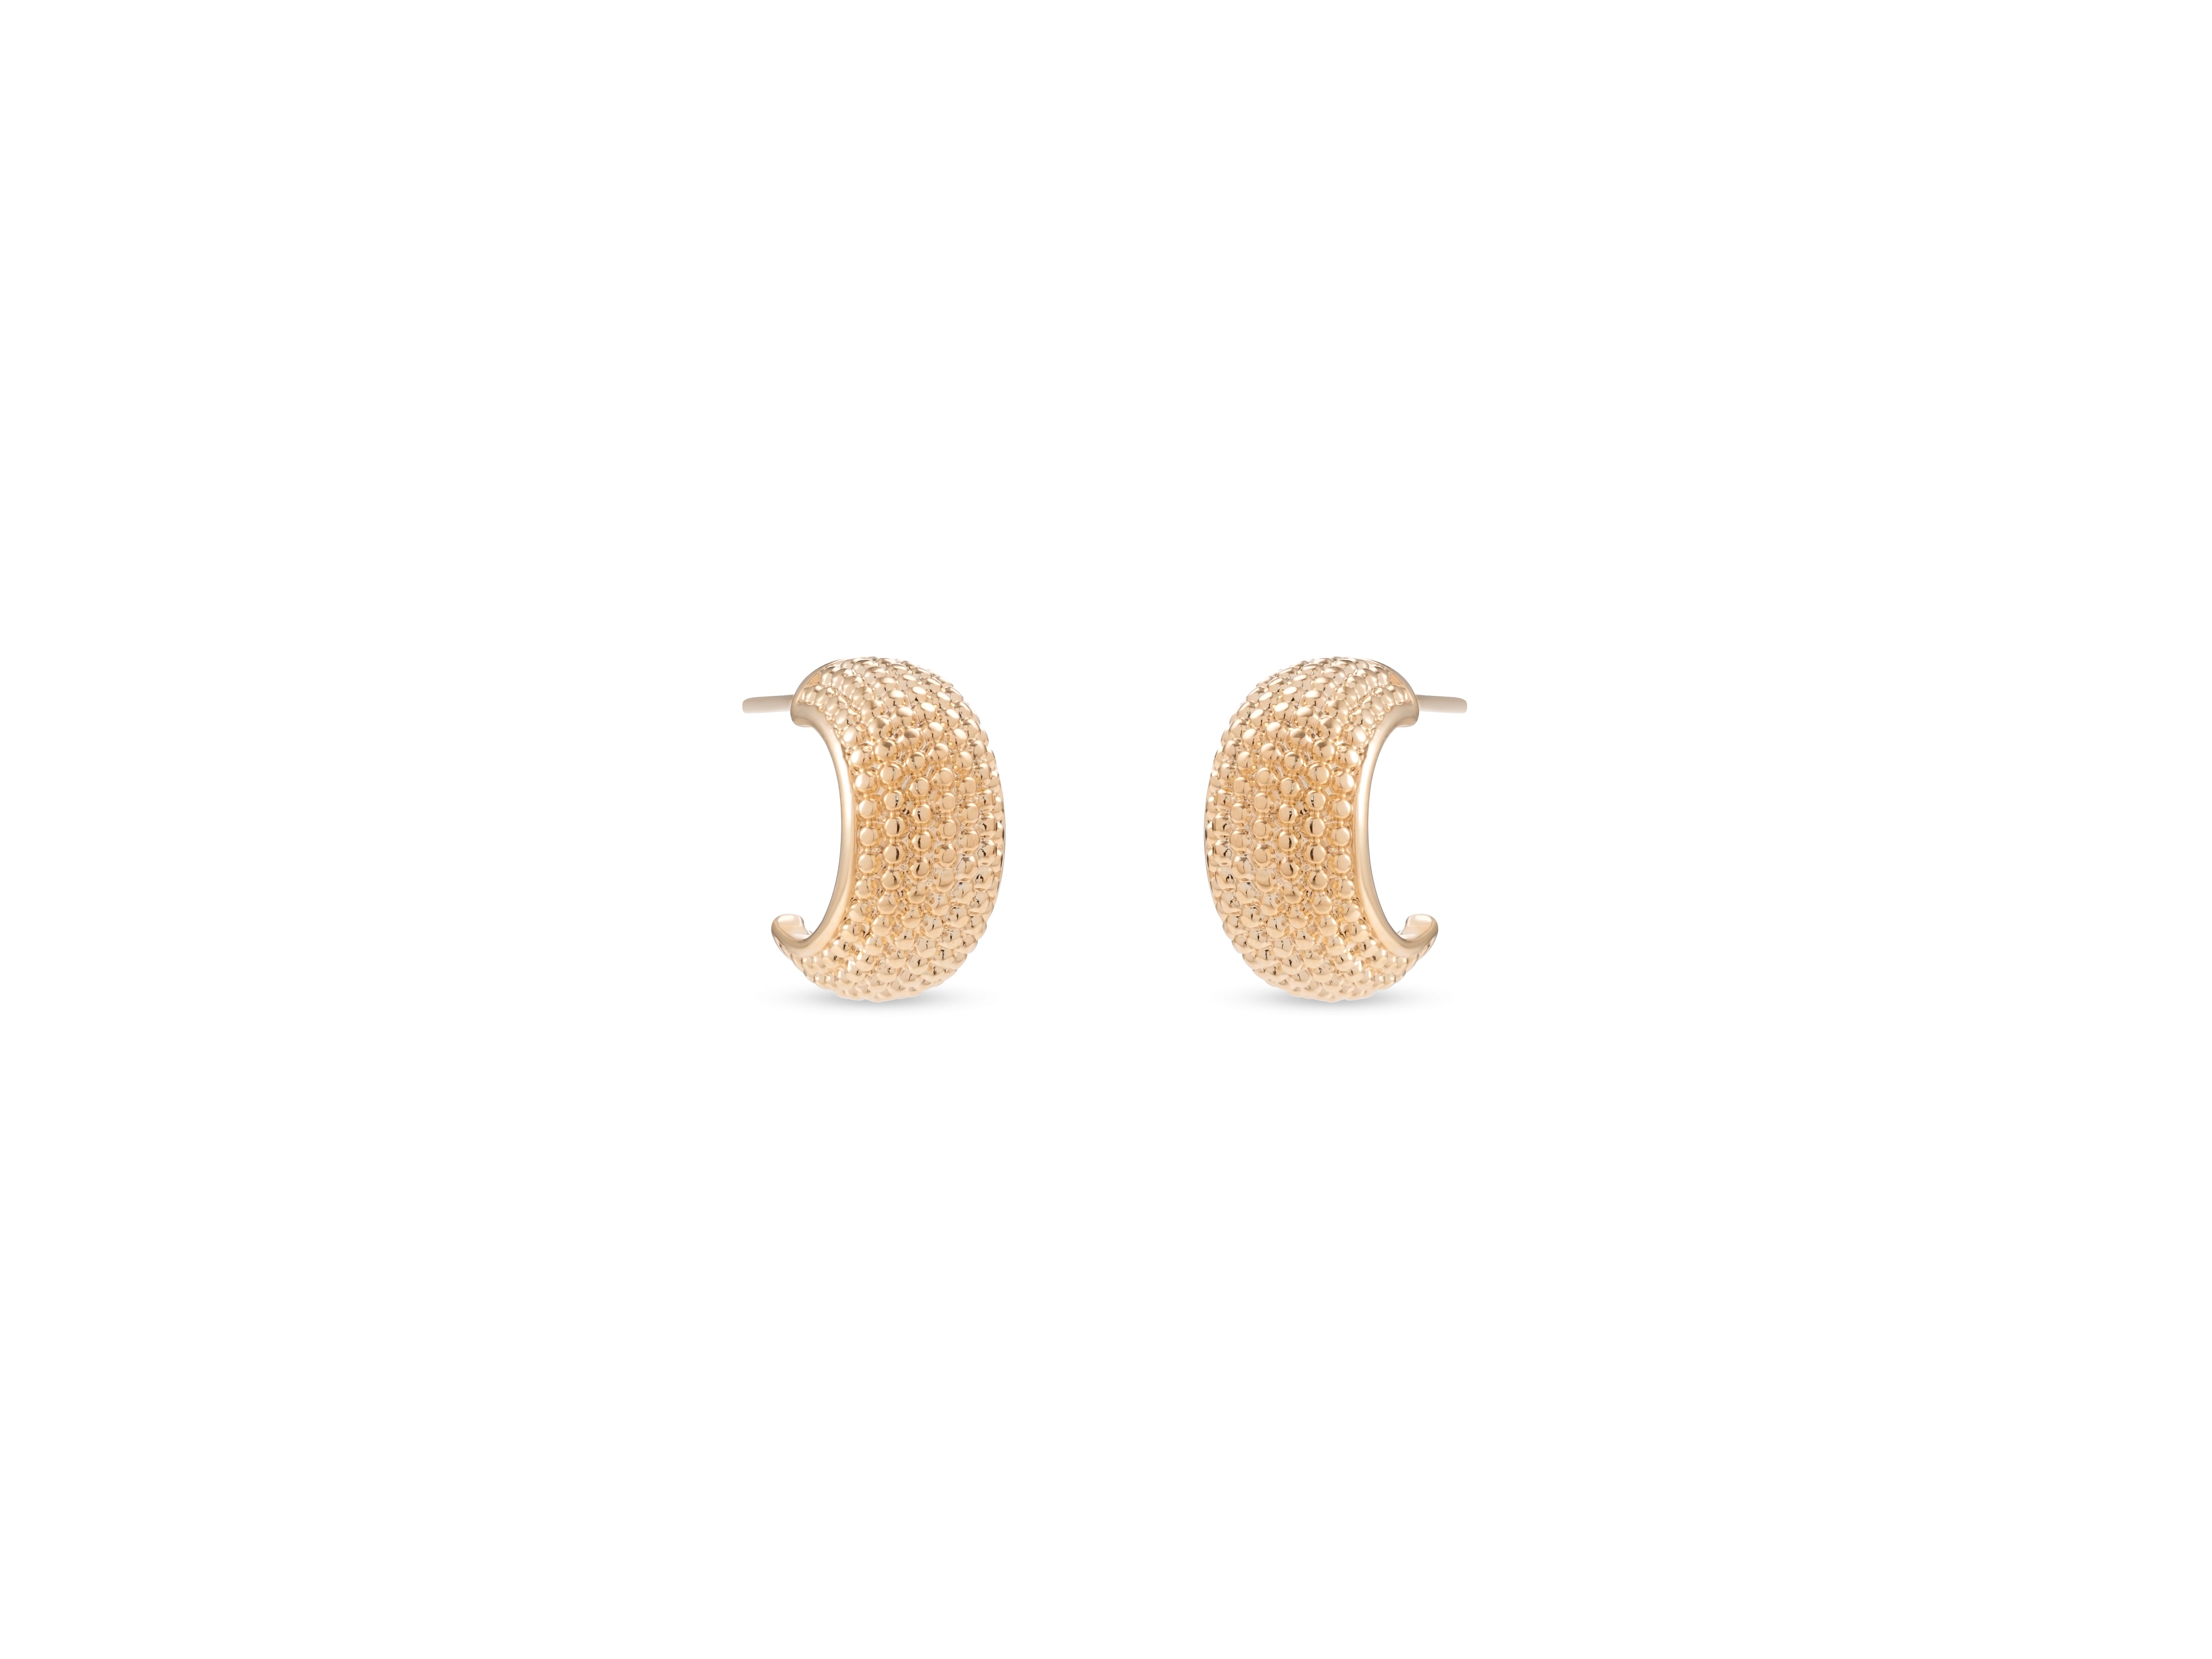 Cora Textured Gold Huggie Earrings